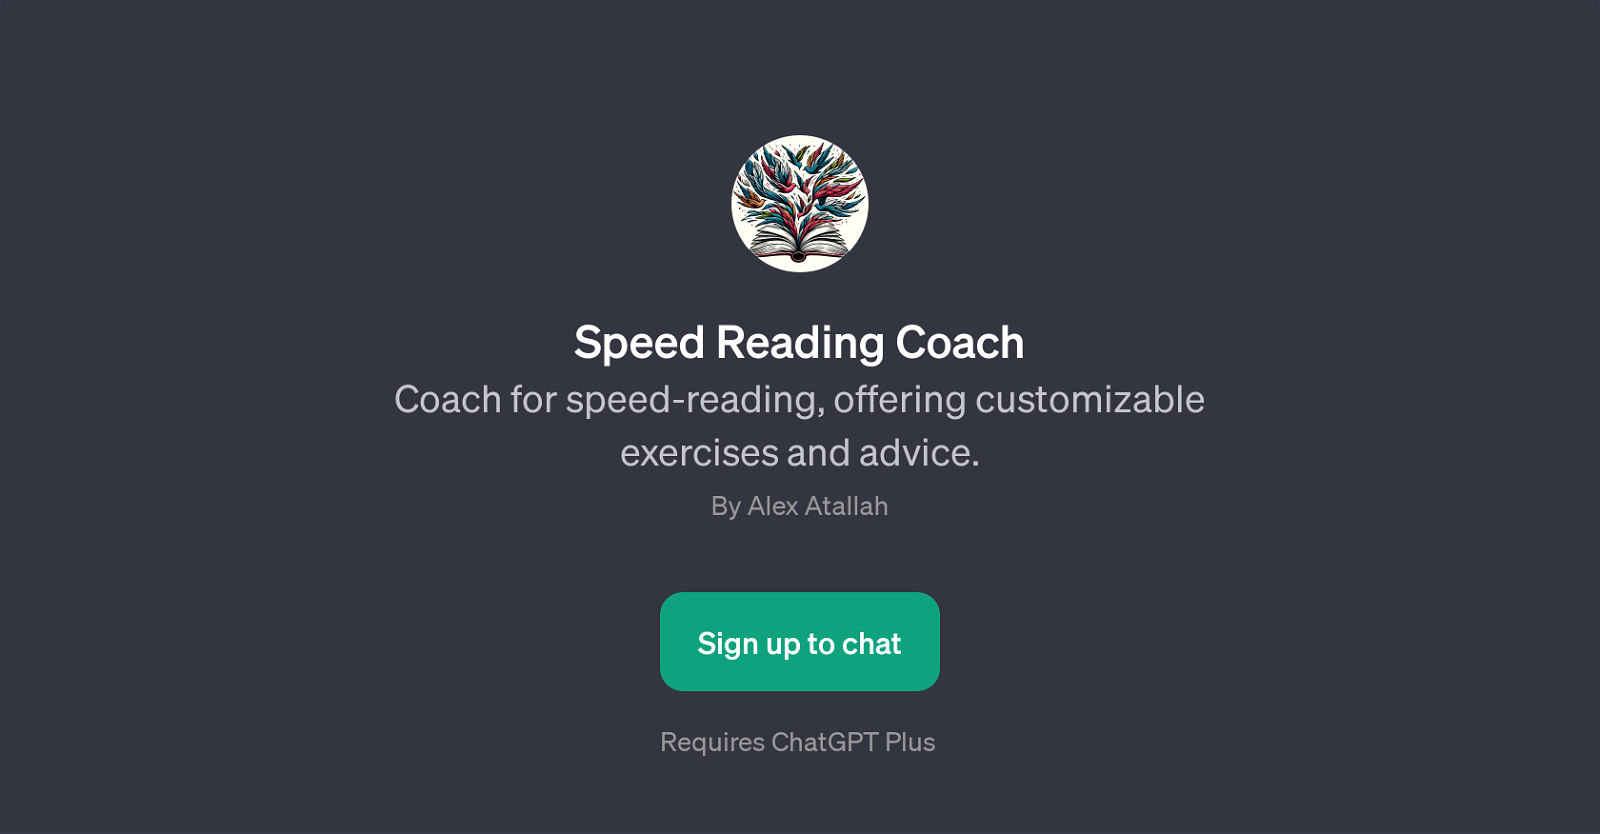 Speed Reading Coach website